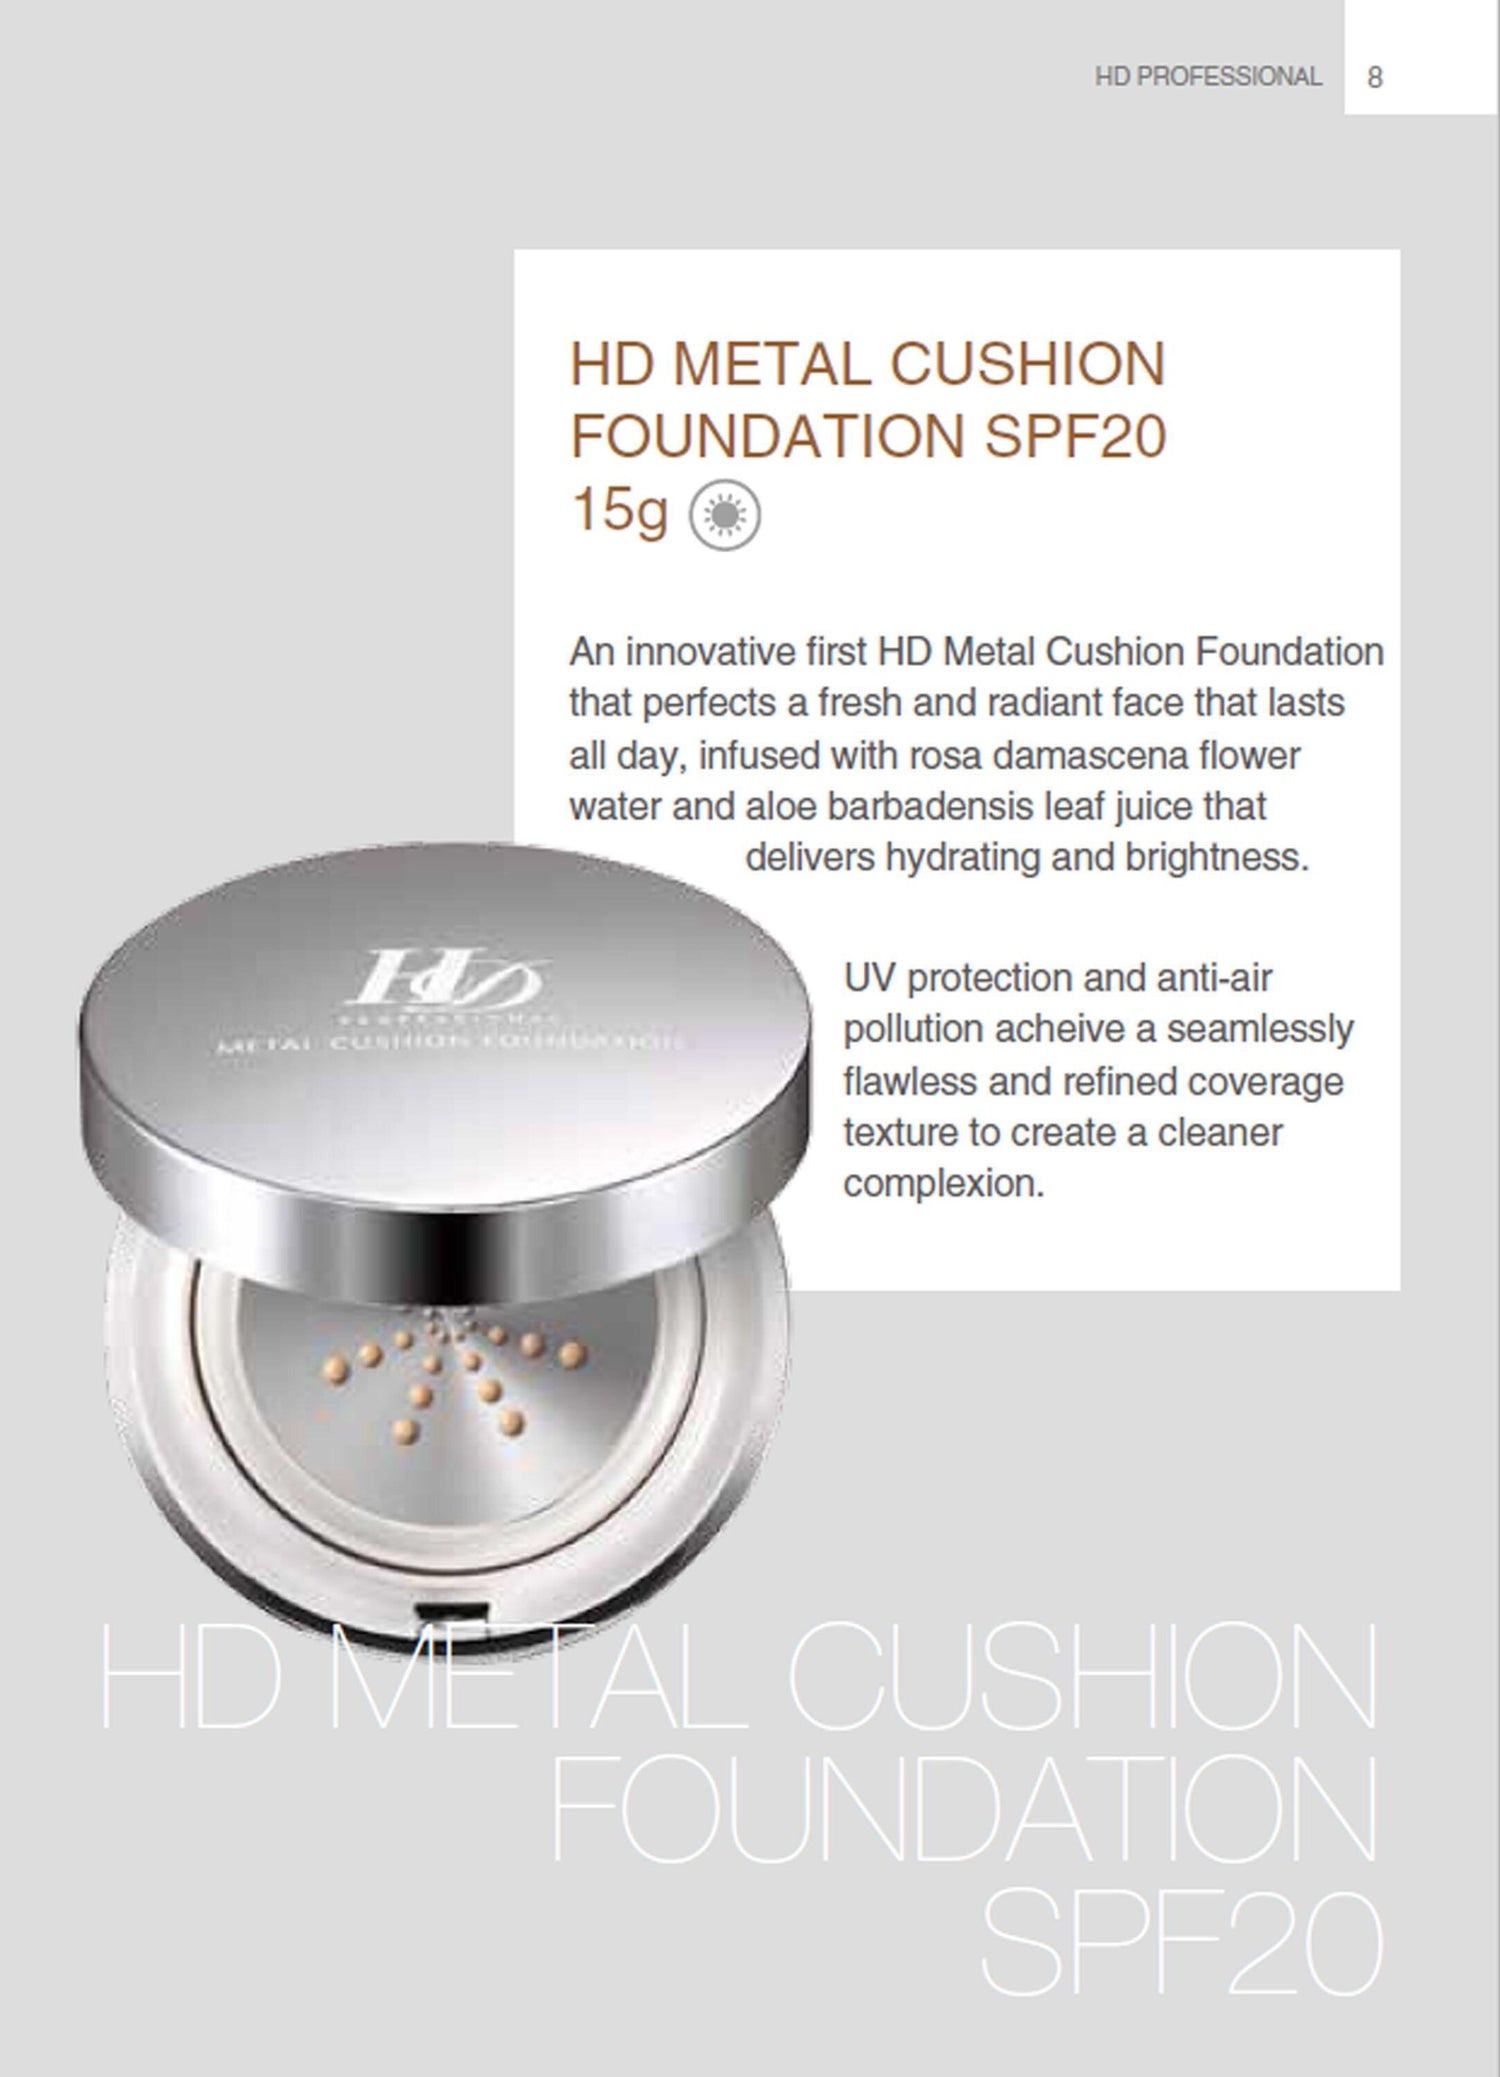 HD Metal Best Cushion Foundation SPF20 - fly up beauty HD makeup professional make up kattong 